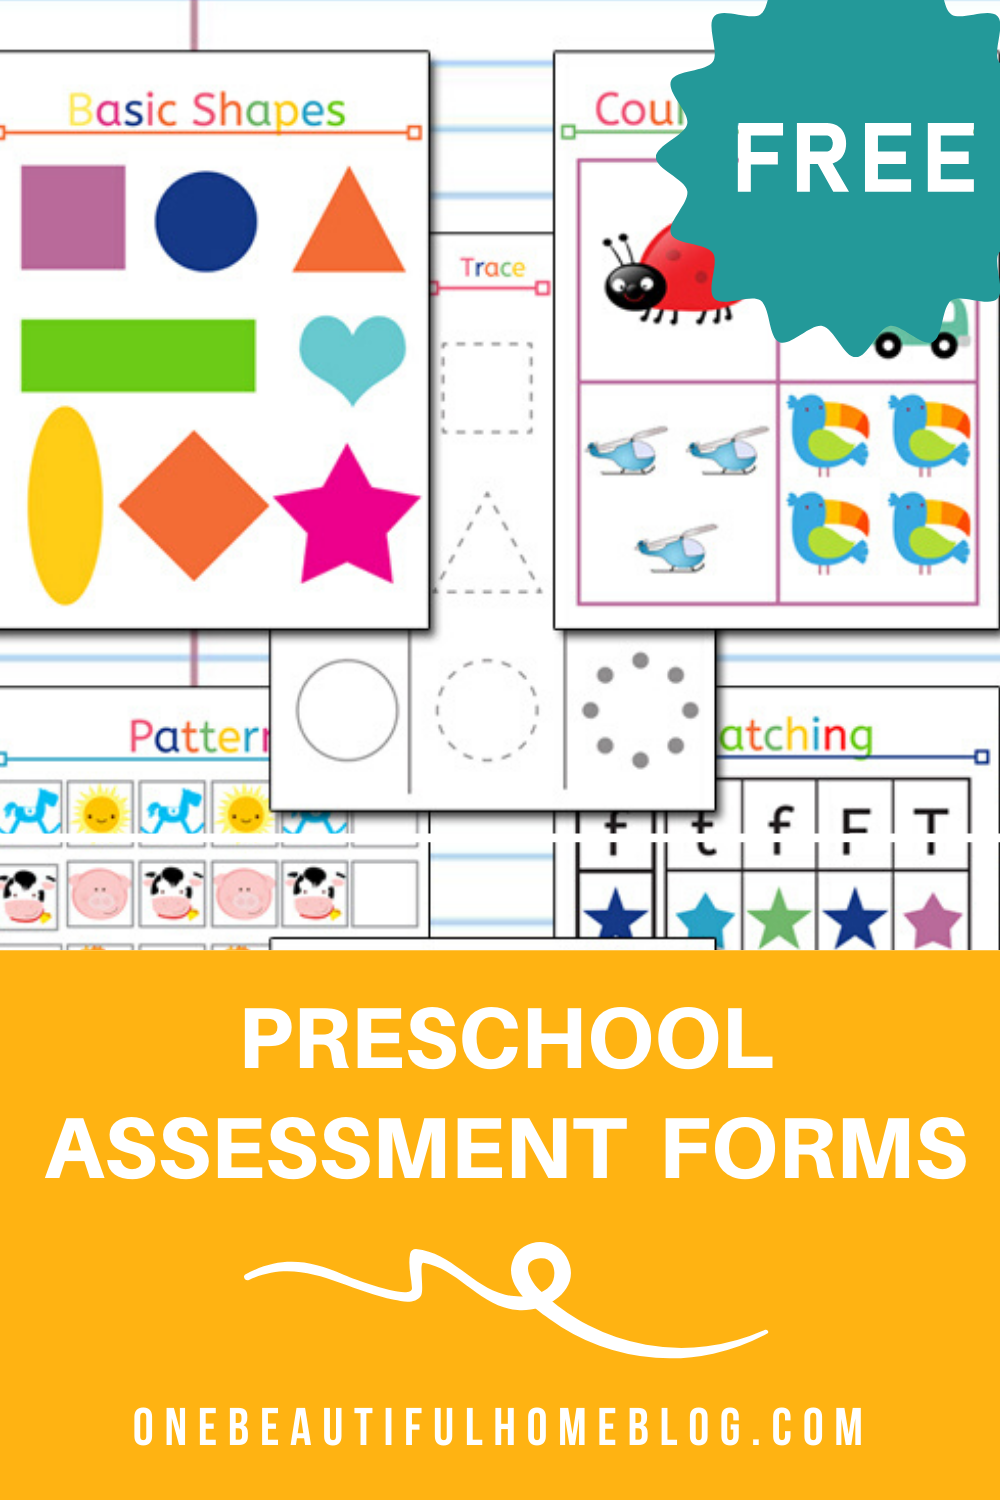 Free Preschool Assessment Template - FREE PRINTABLE TEMPLATES